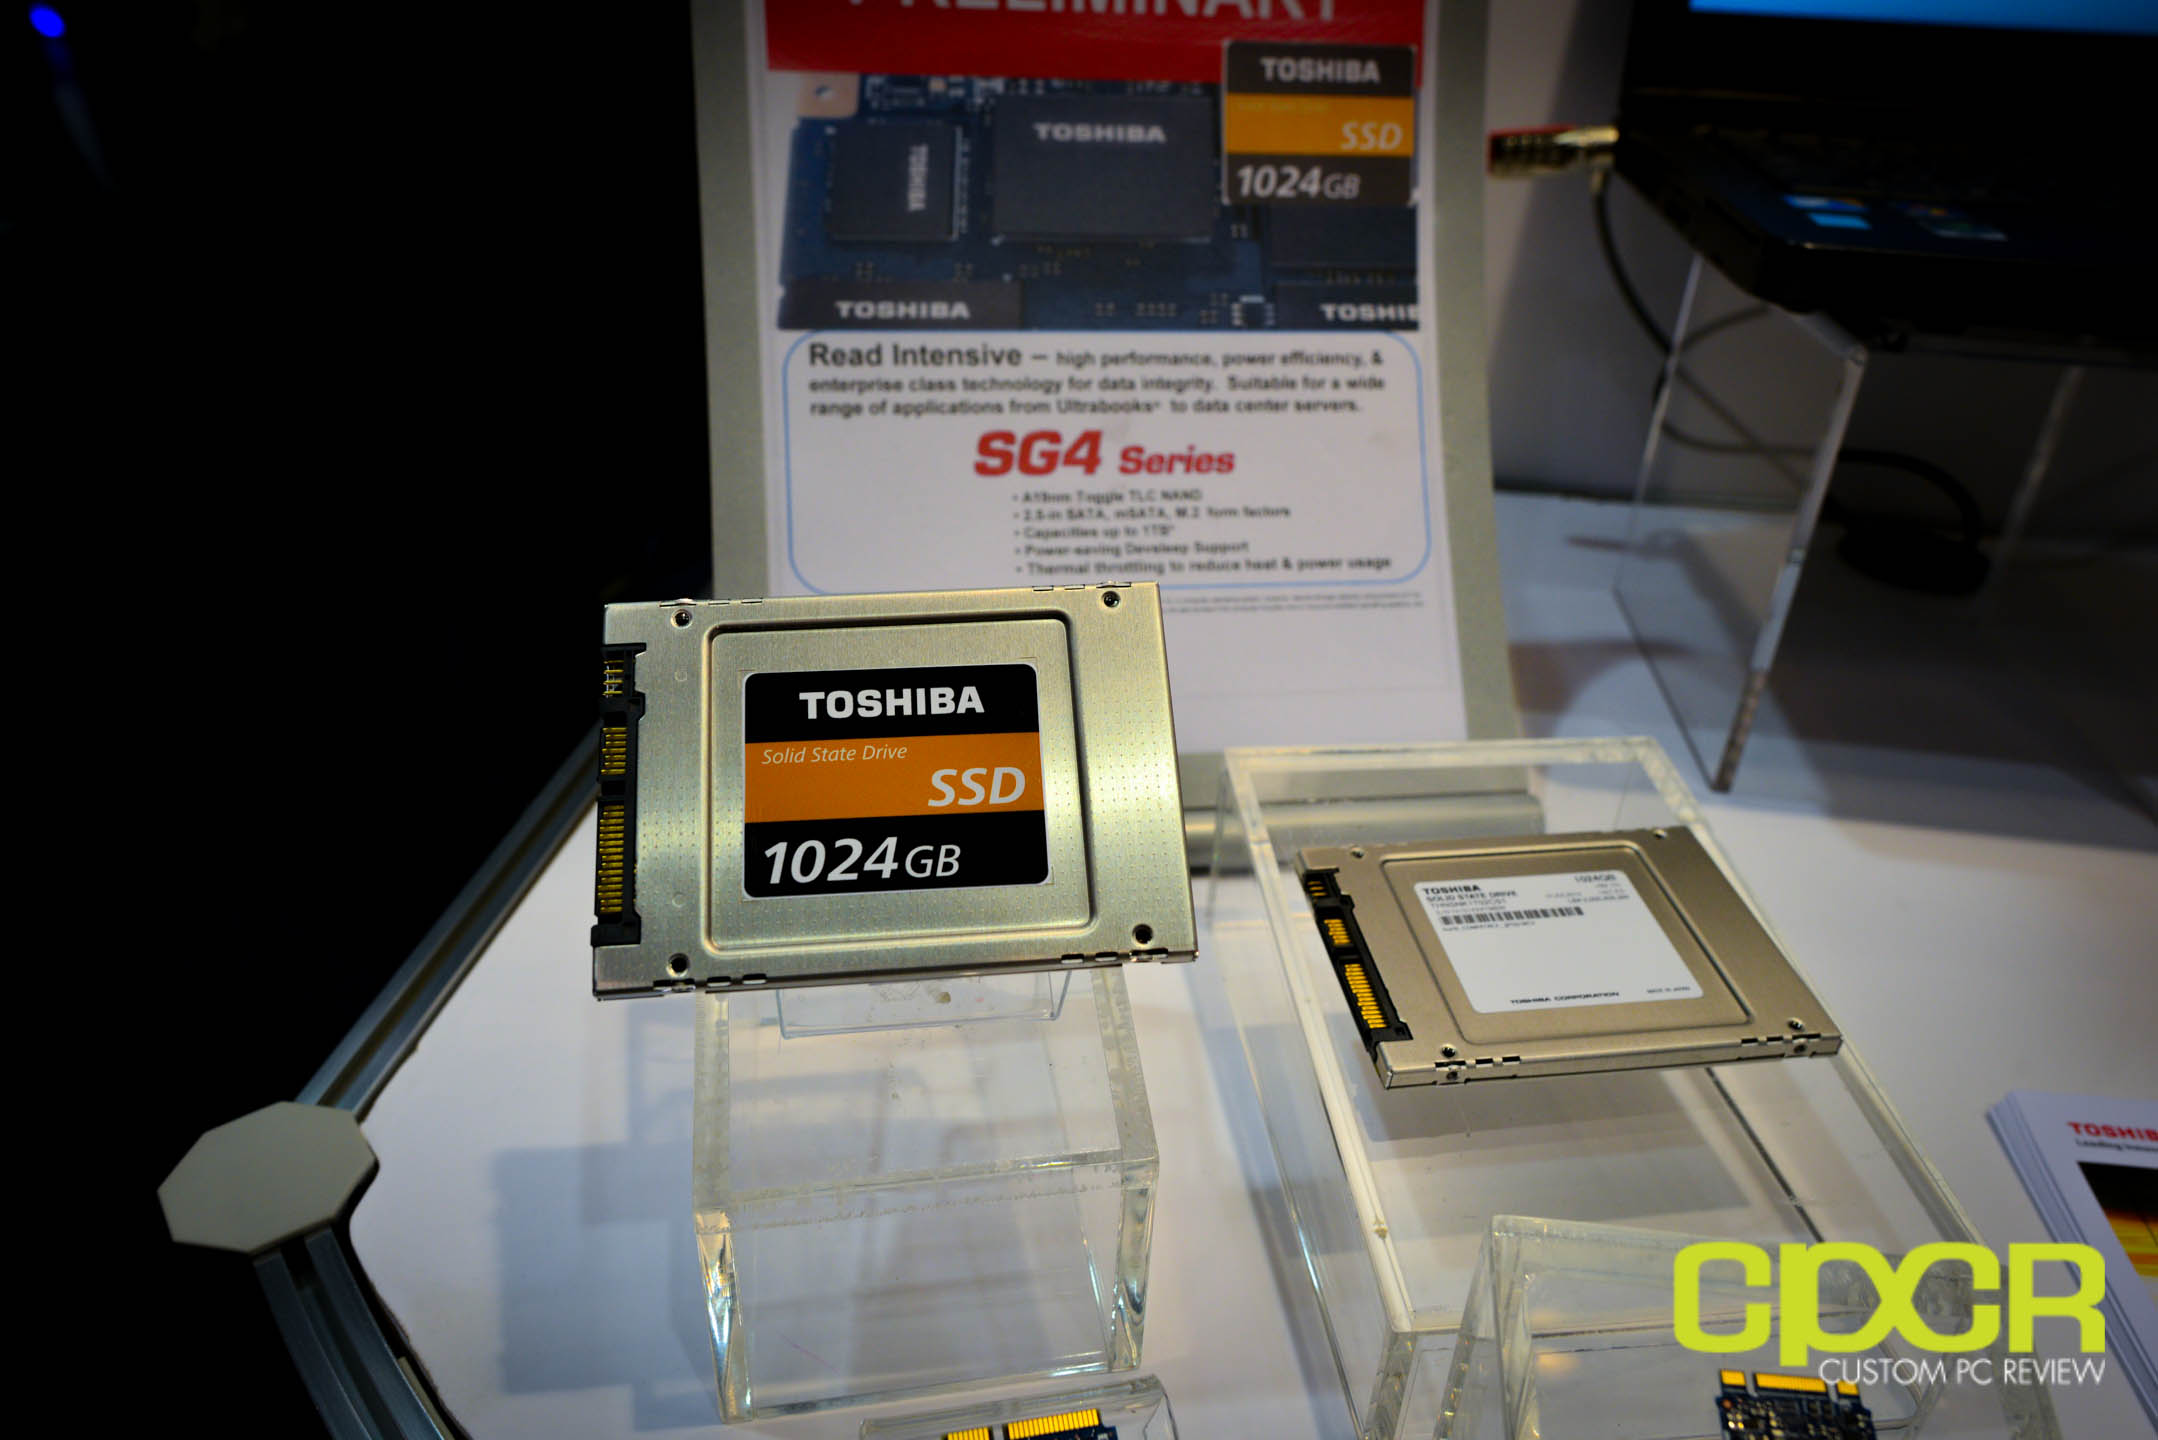 FMS 2014: Toshiba Displays SG4 A19nm TLC SSDs, 15nm NAND Wafer